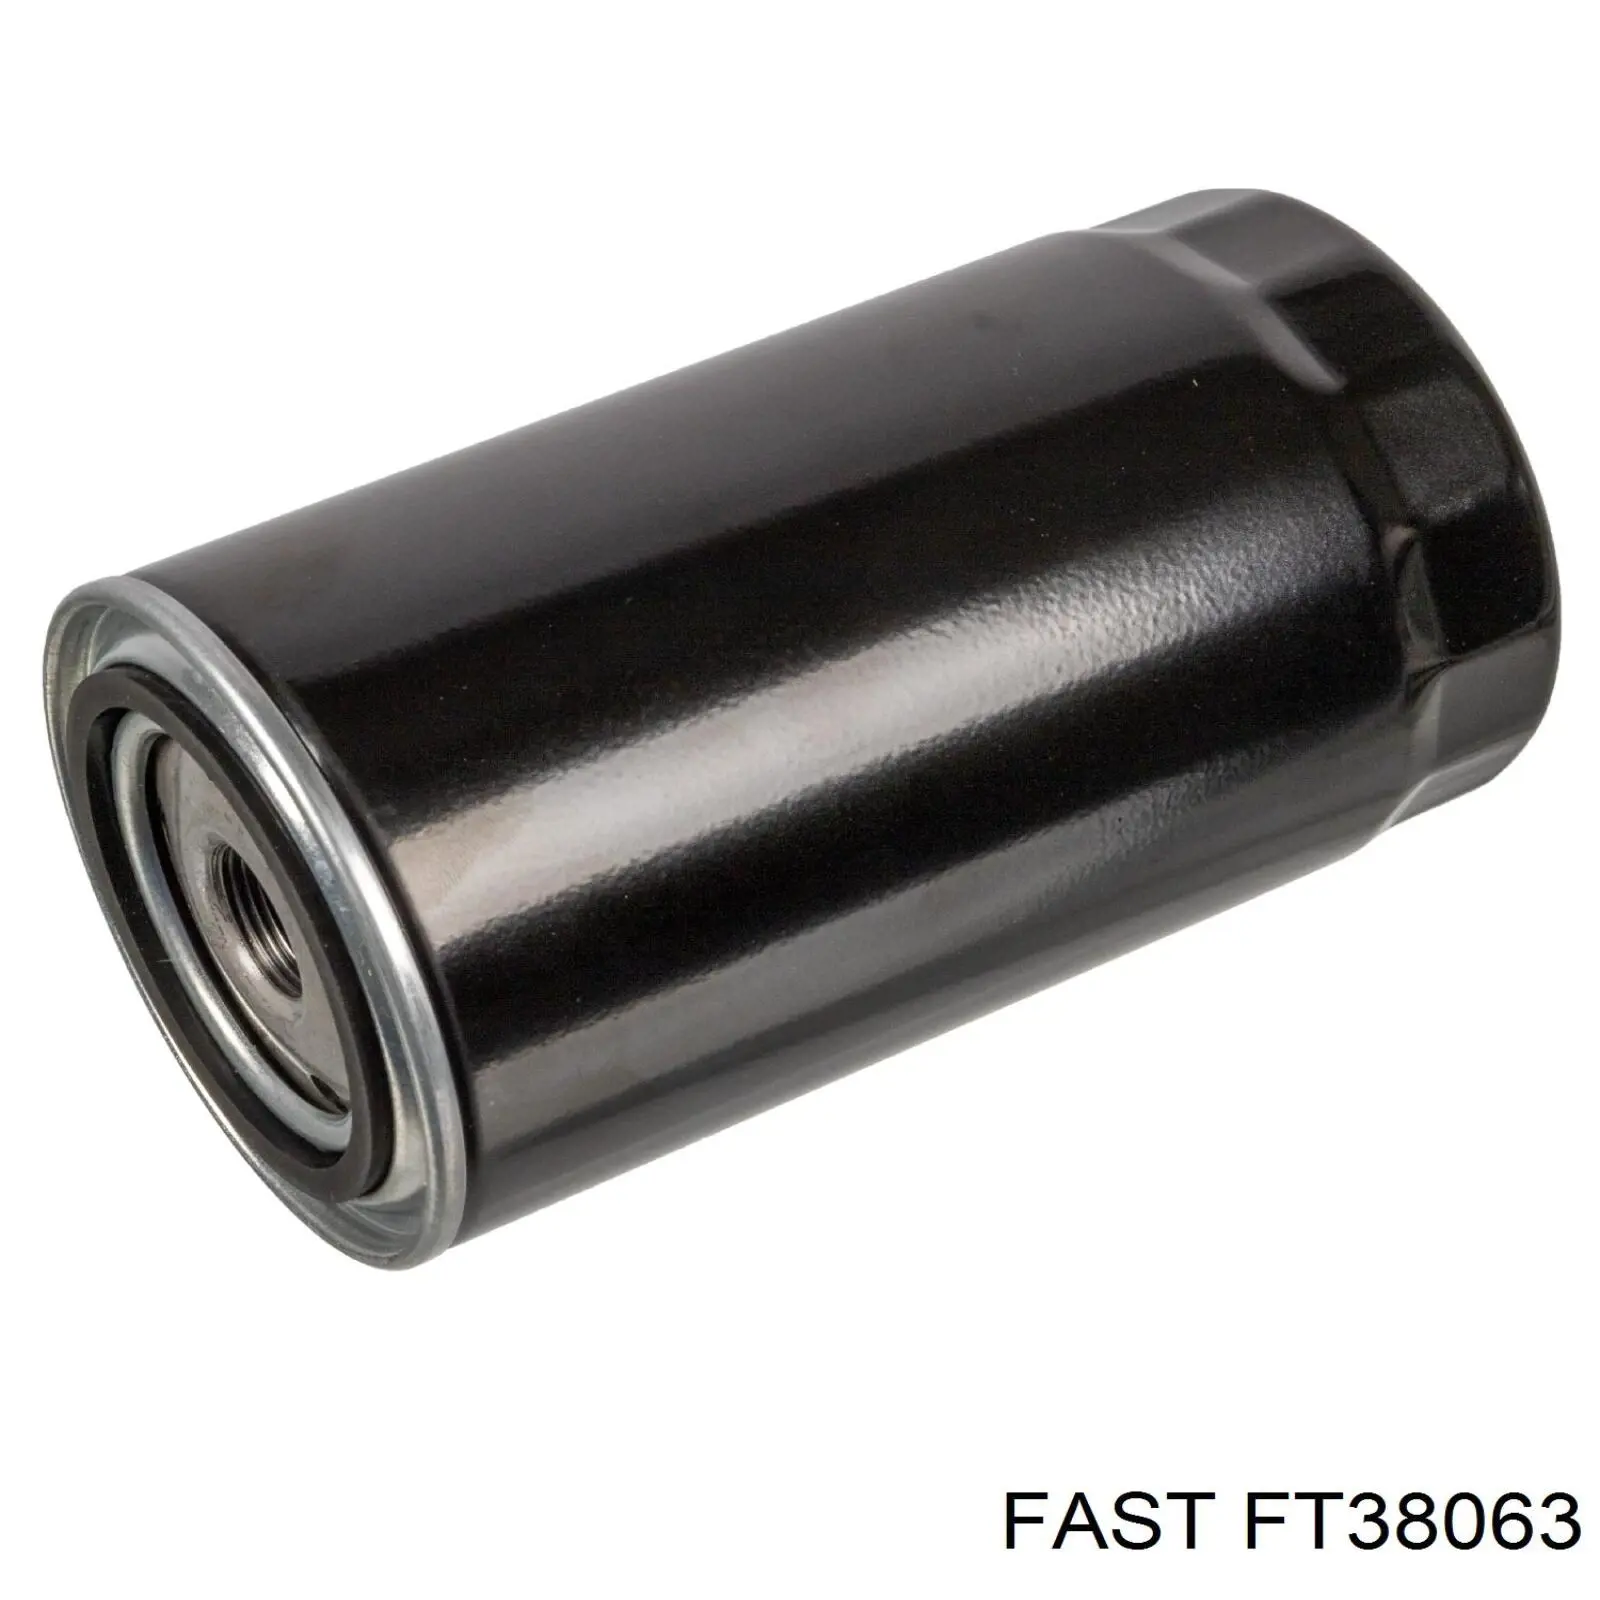 FT38063 Fast filtro de aceite